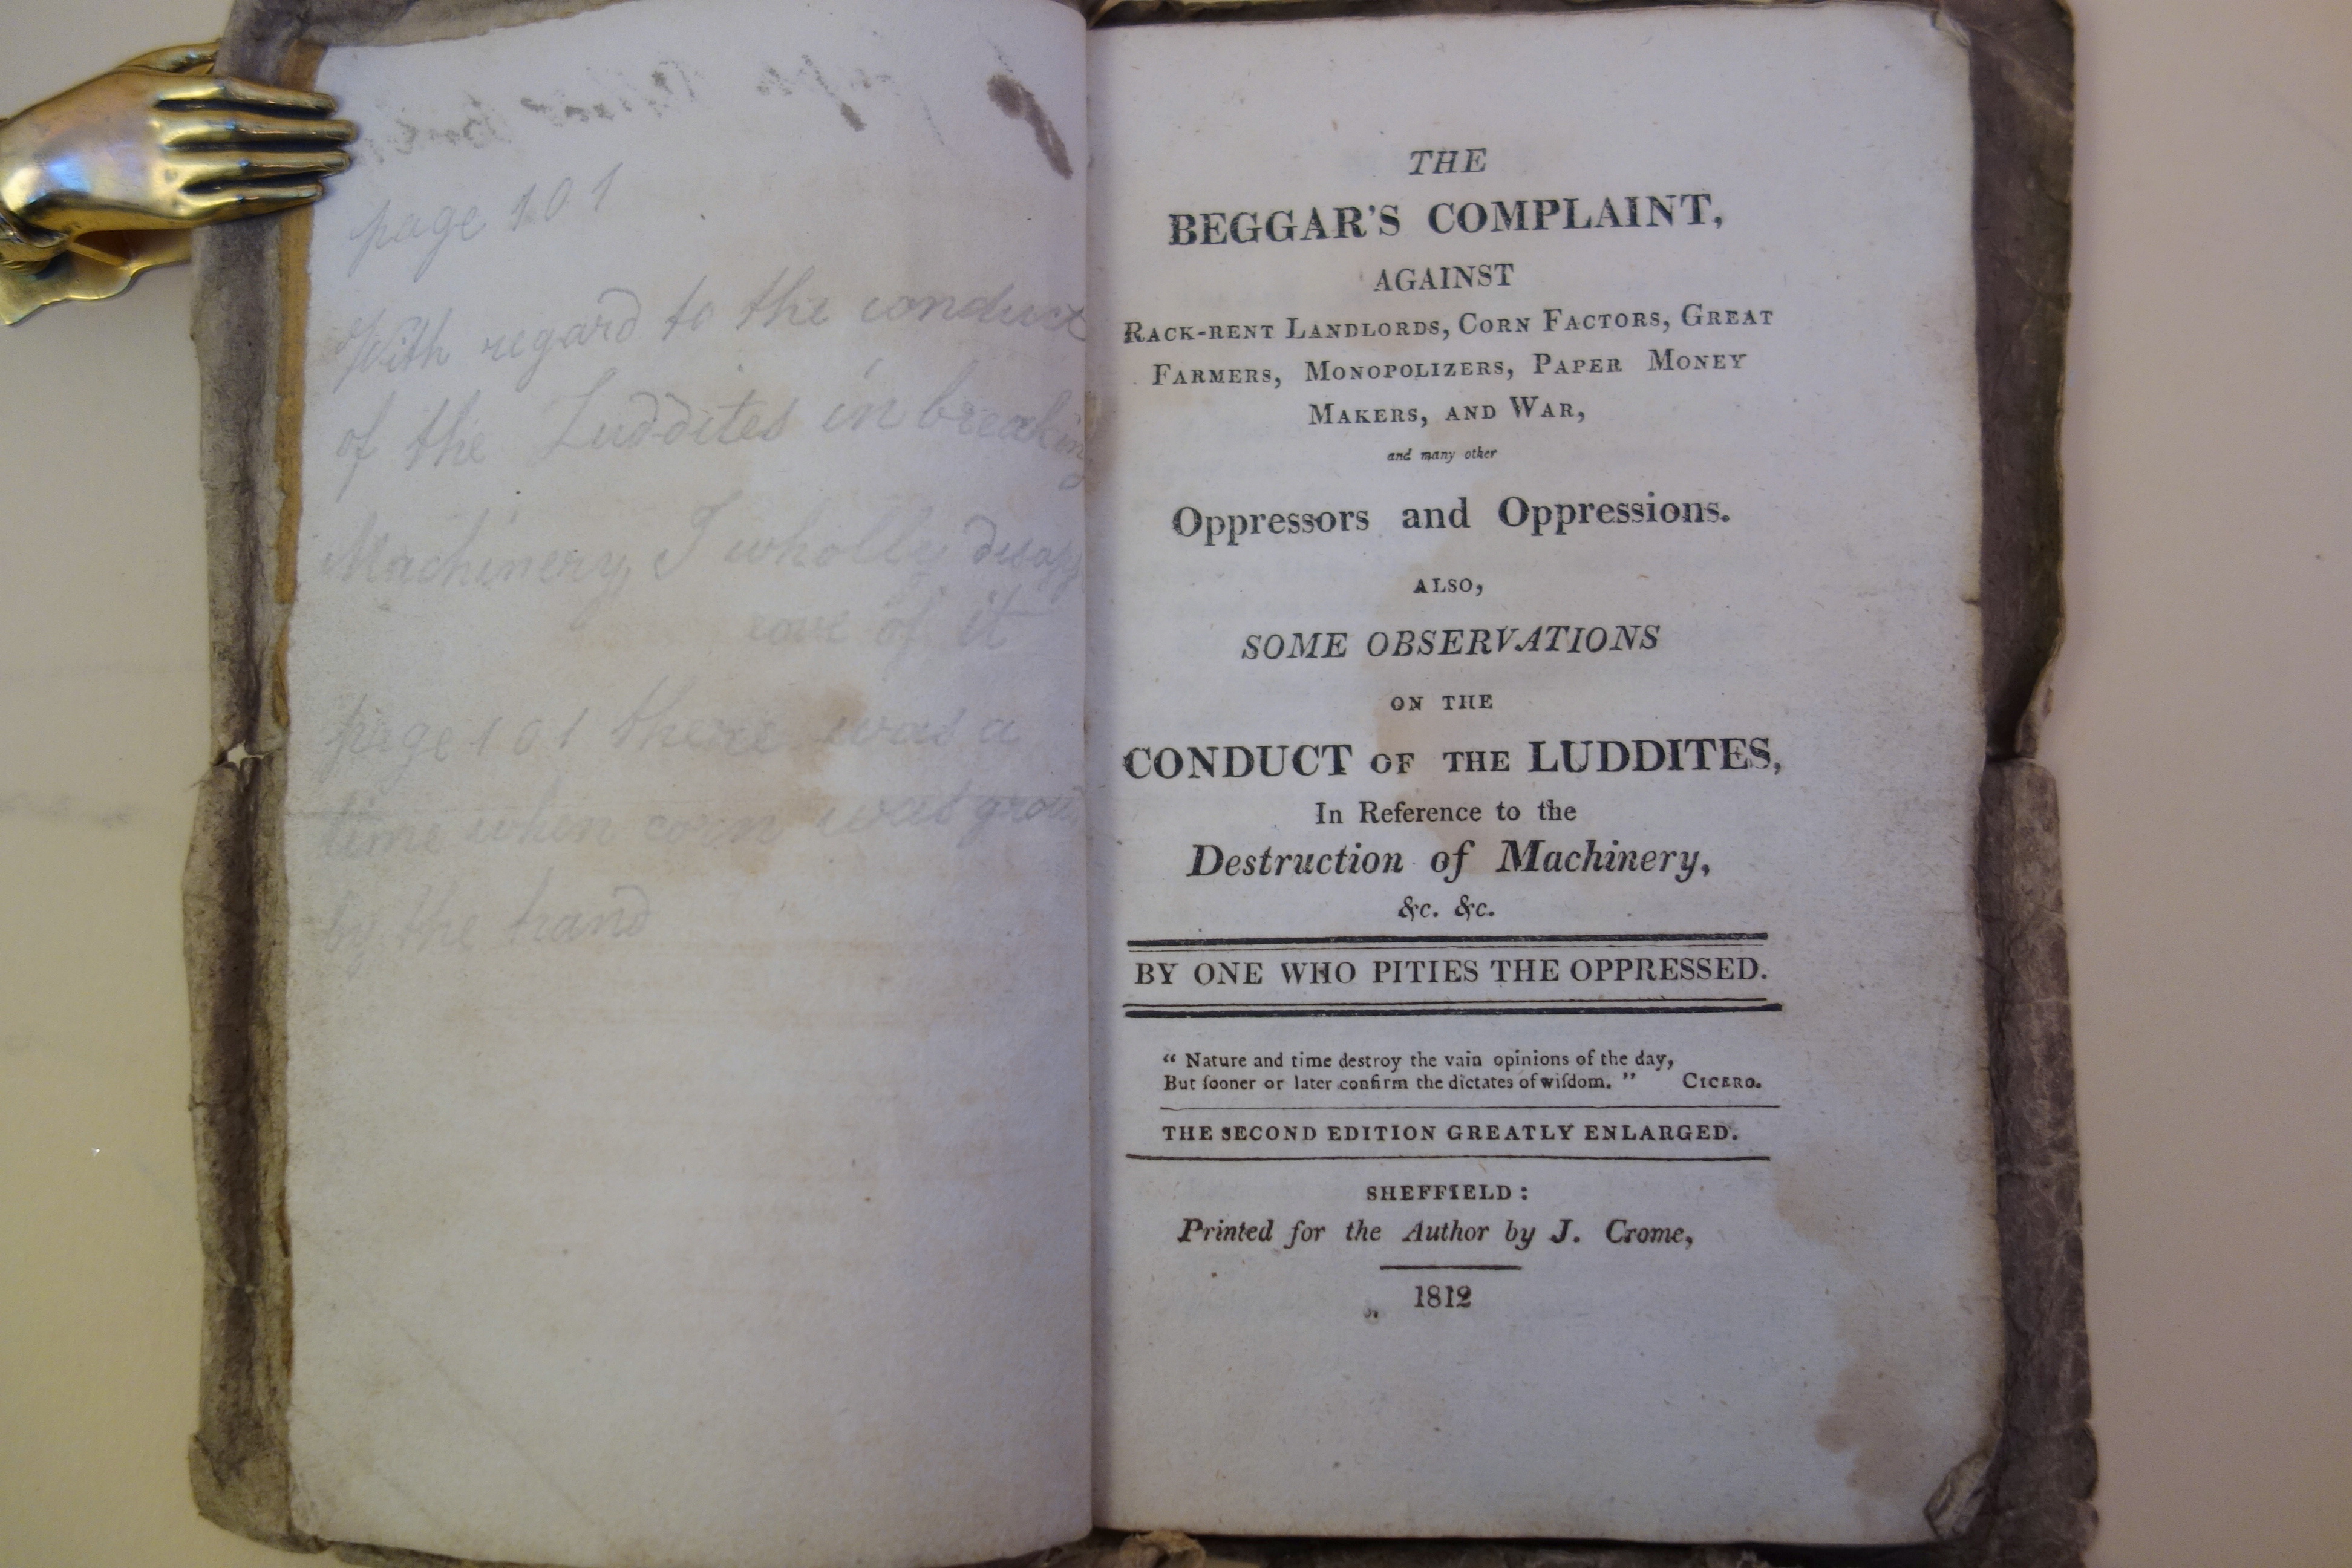 Beaumont Beggar's complaint title page